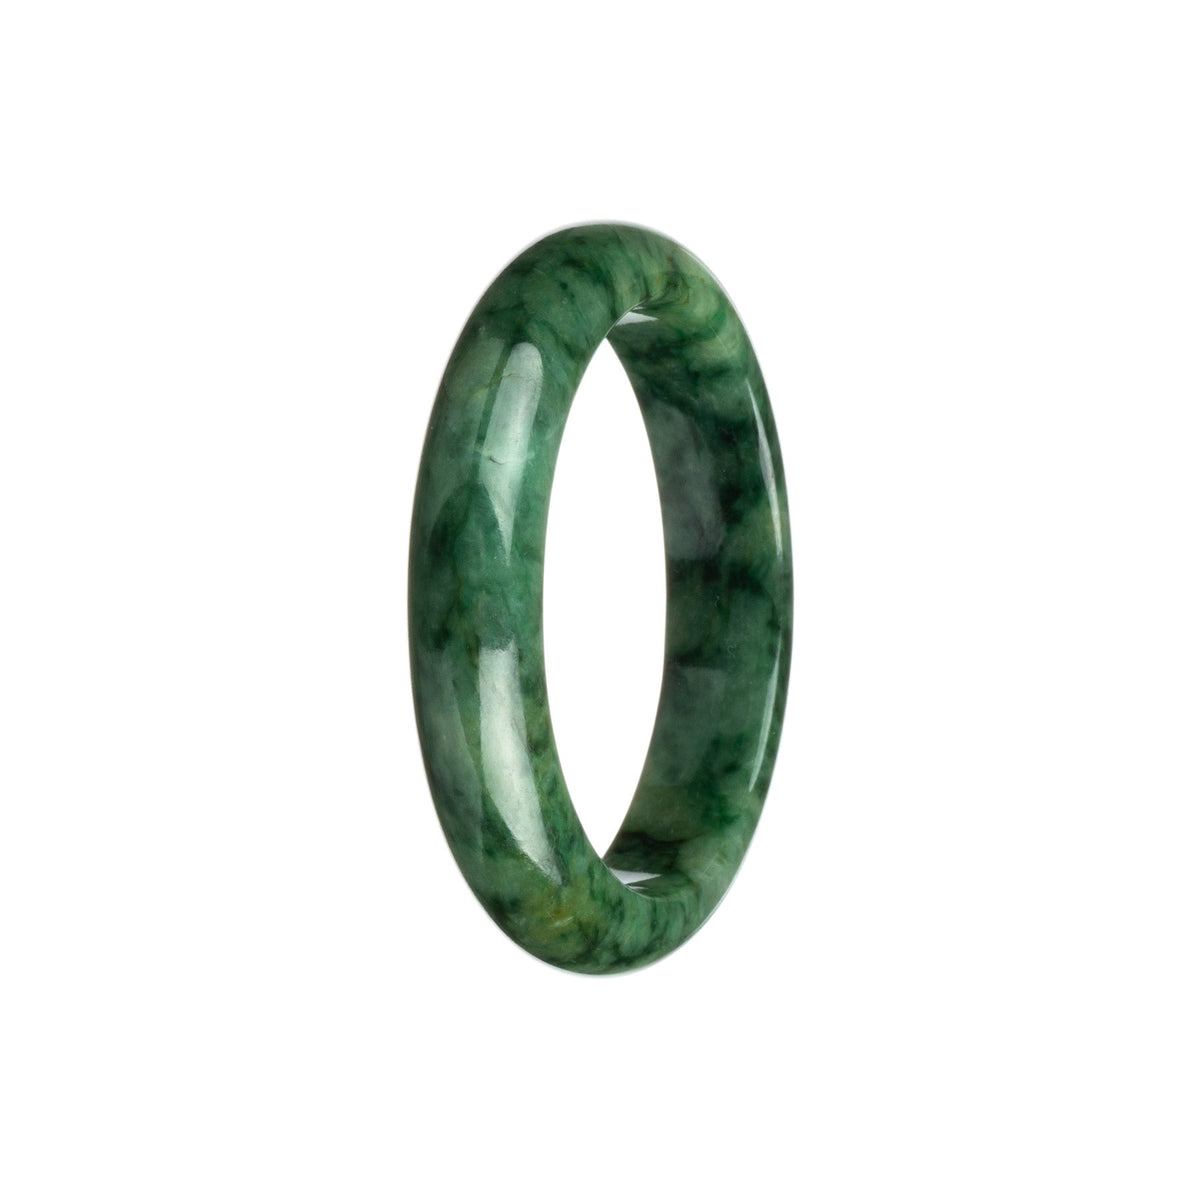 Certified Grade A Green with Dark Green Jade Bangle - 55mm Half Moon